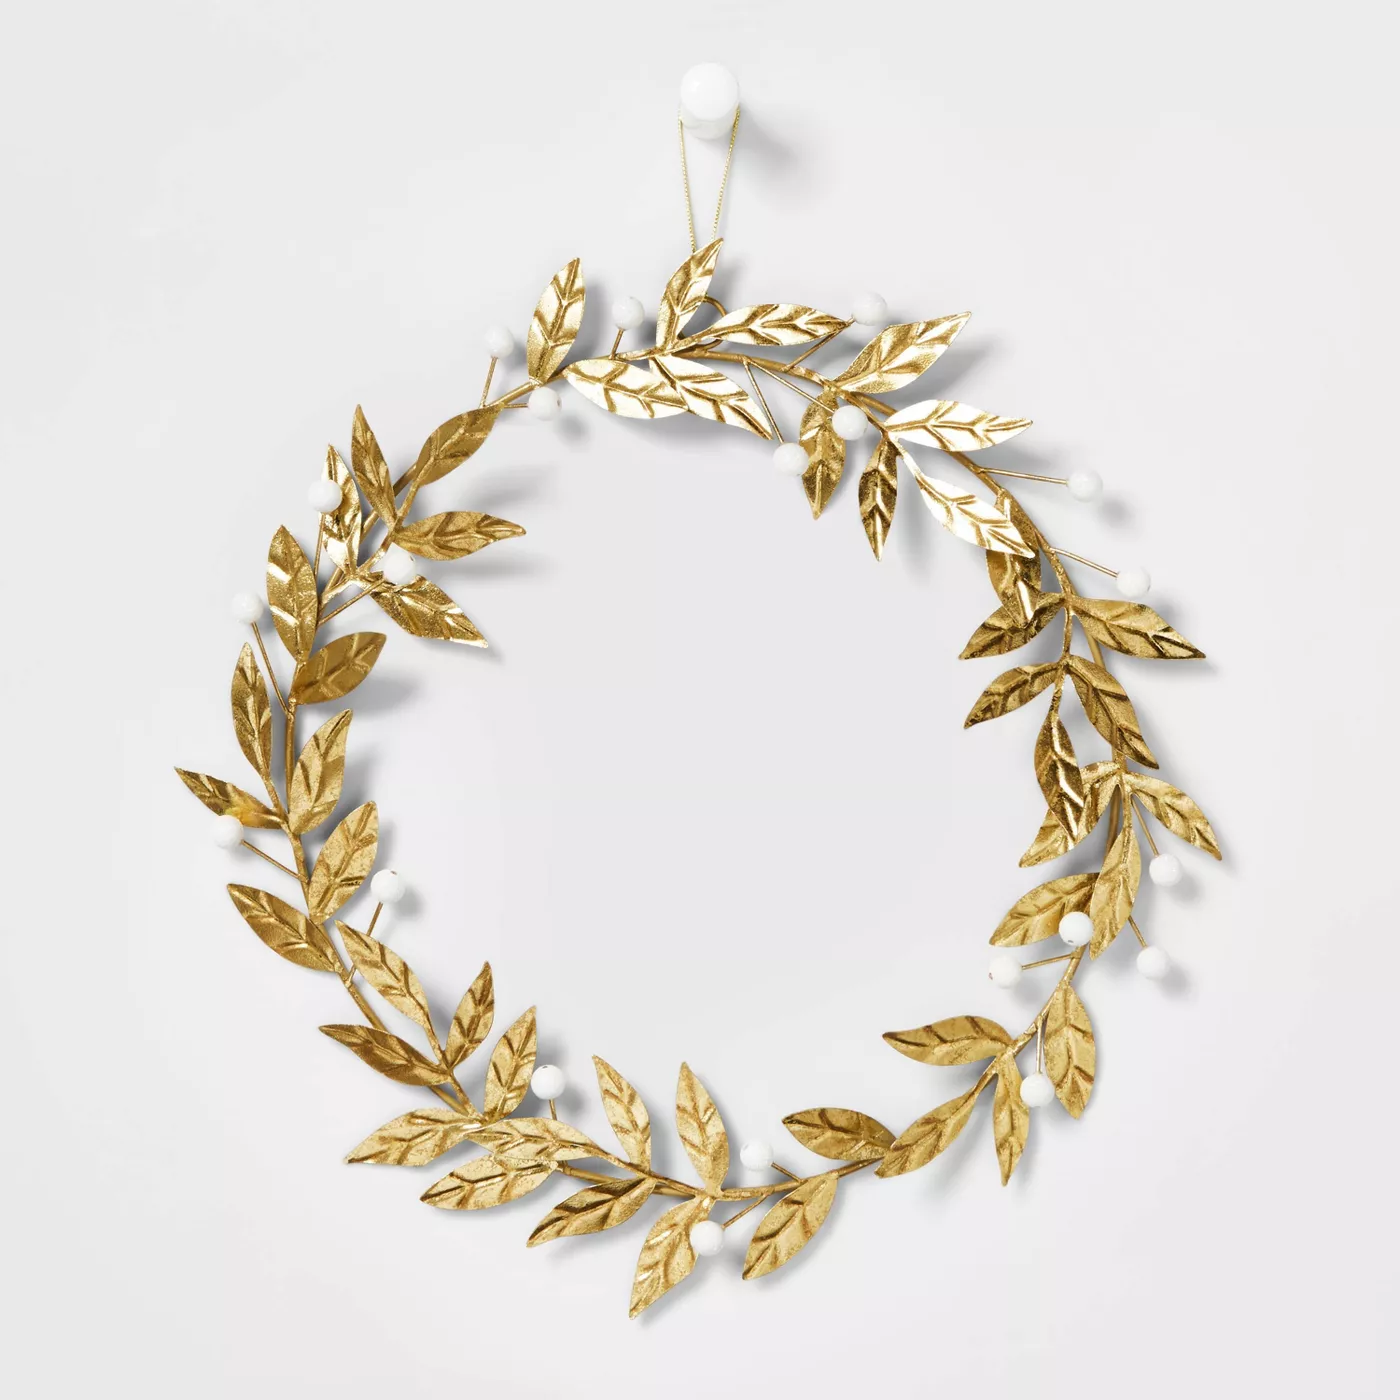 14in Metal Gold Botanical Wreath with White Berries - Wondershop™ - image 1 of 3